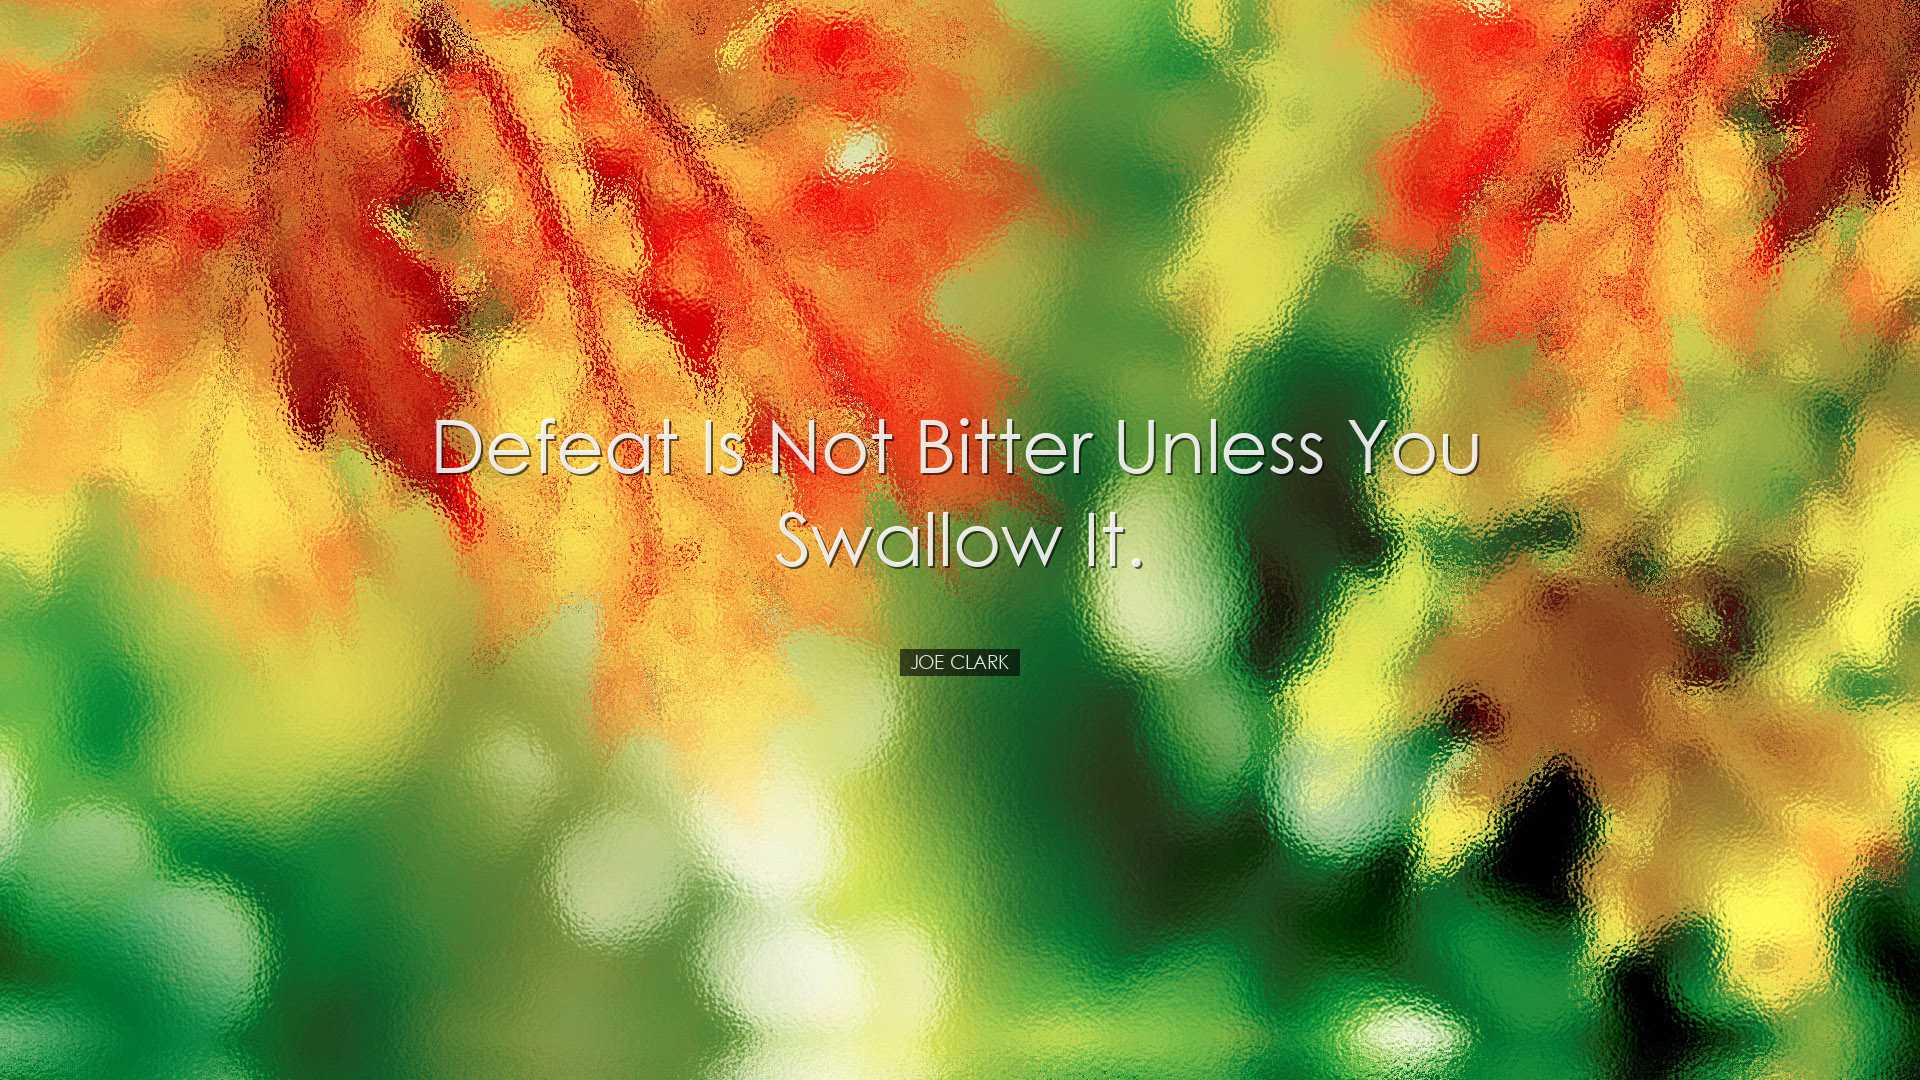 Defeat is not bitter unless you swallow it. - Joe Clark